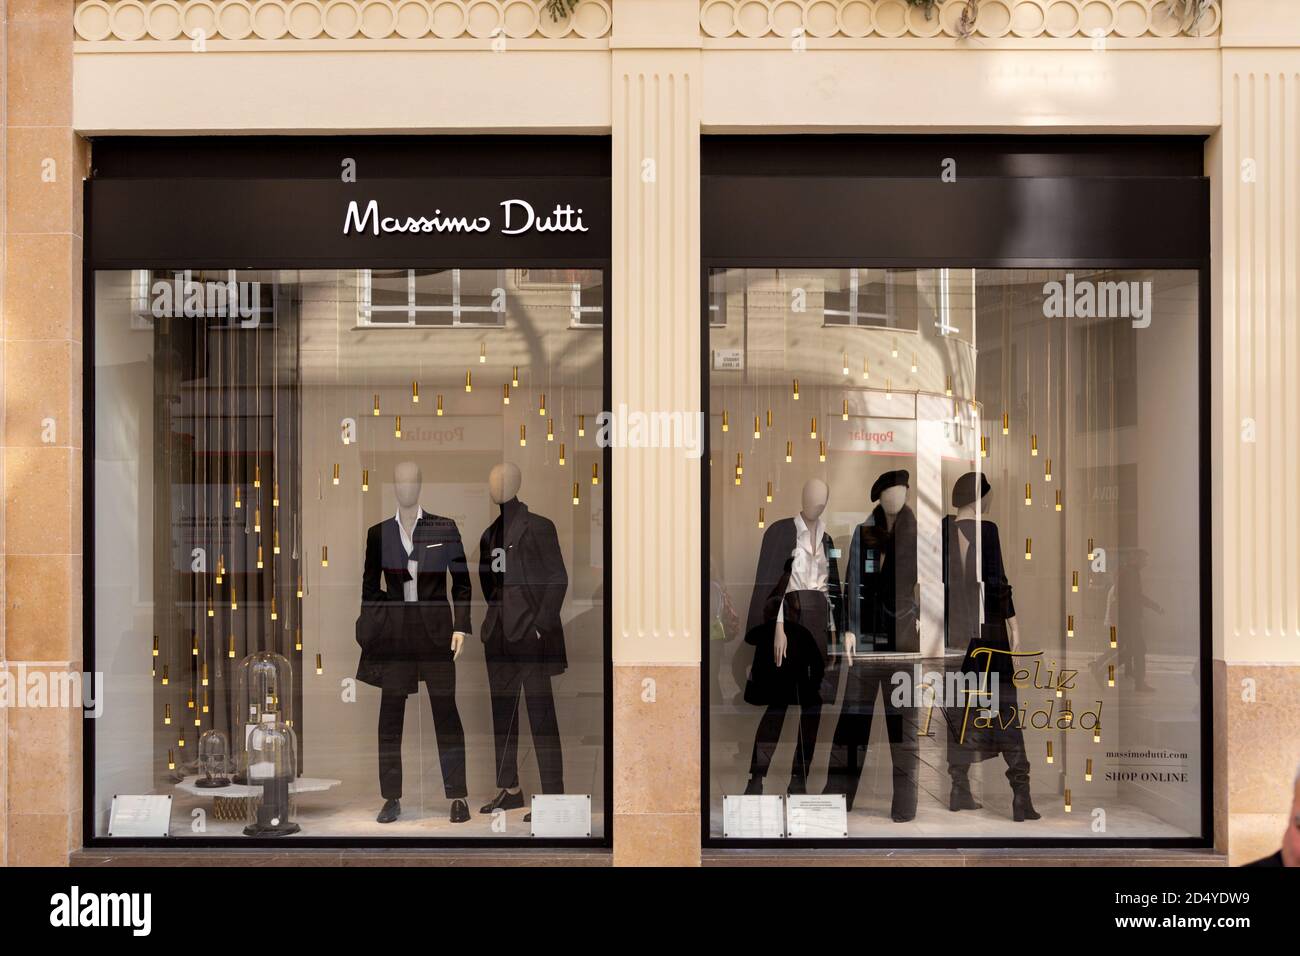 Massimo Dutti display window. Massimo ...